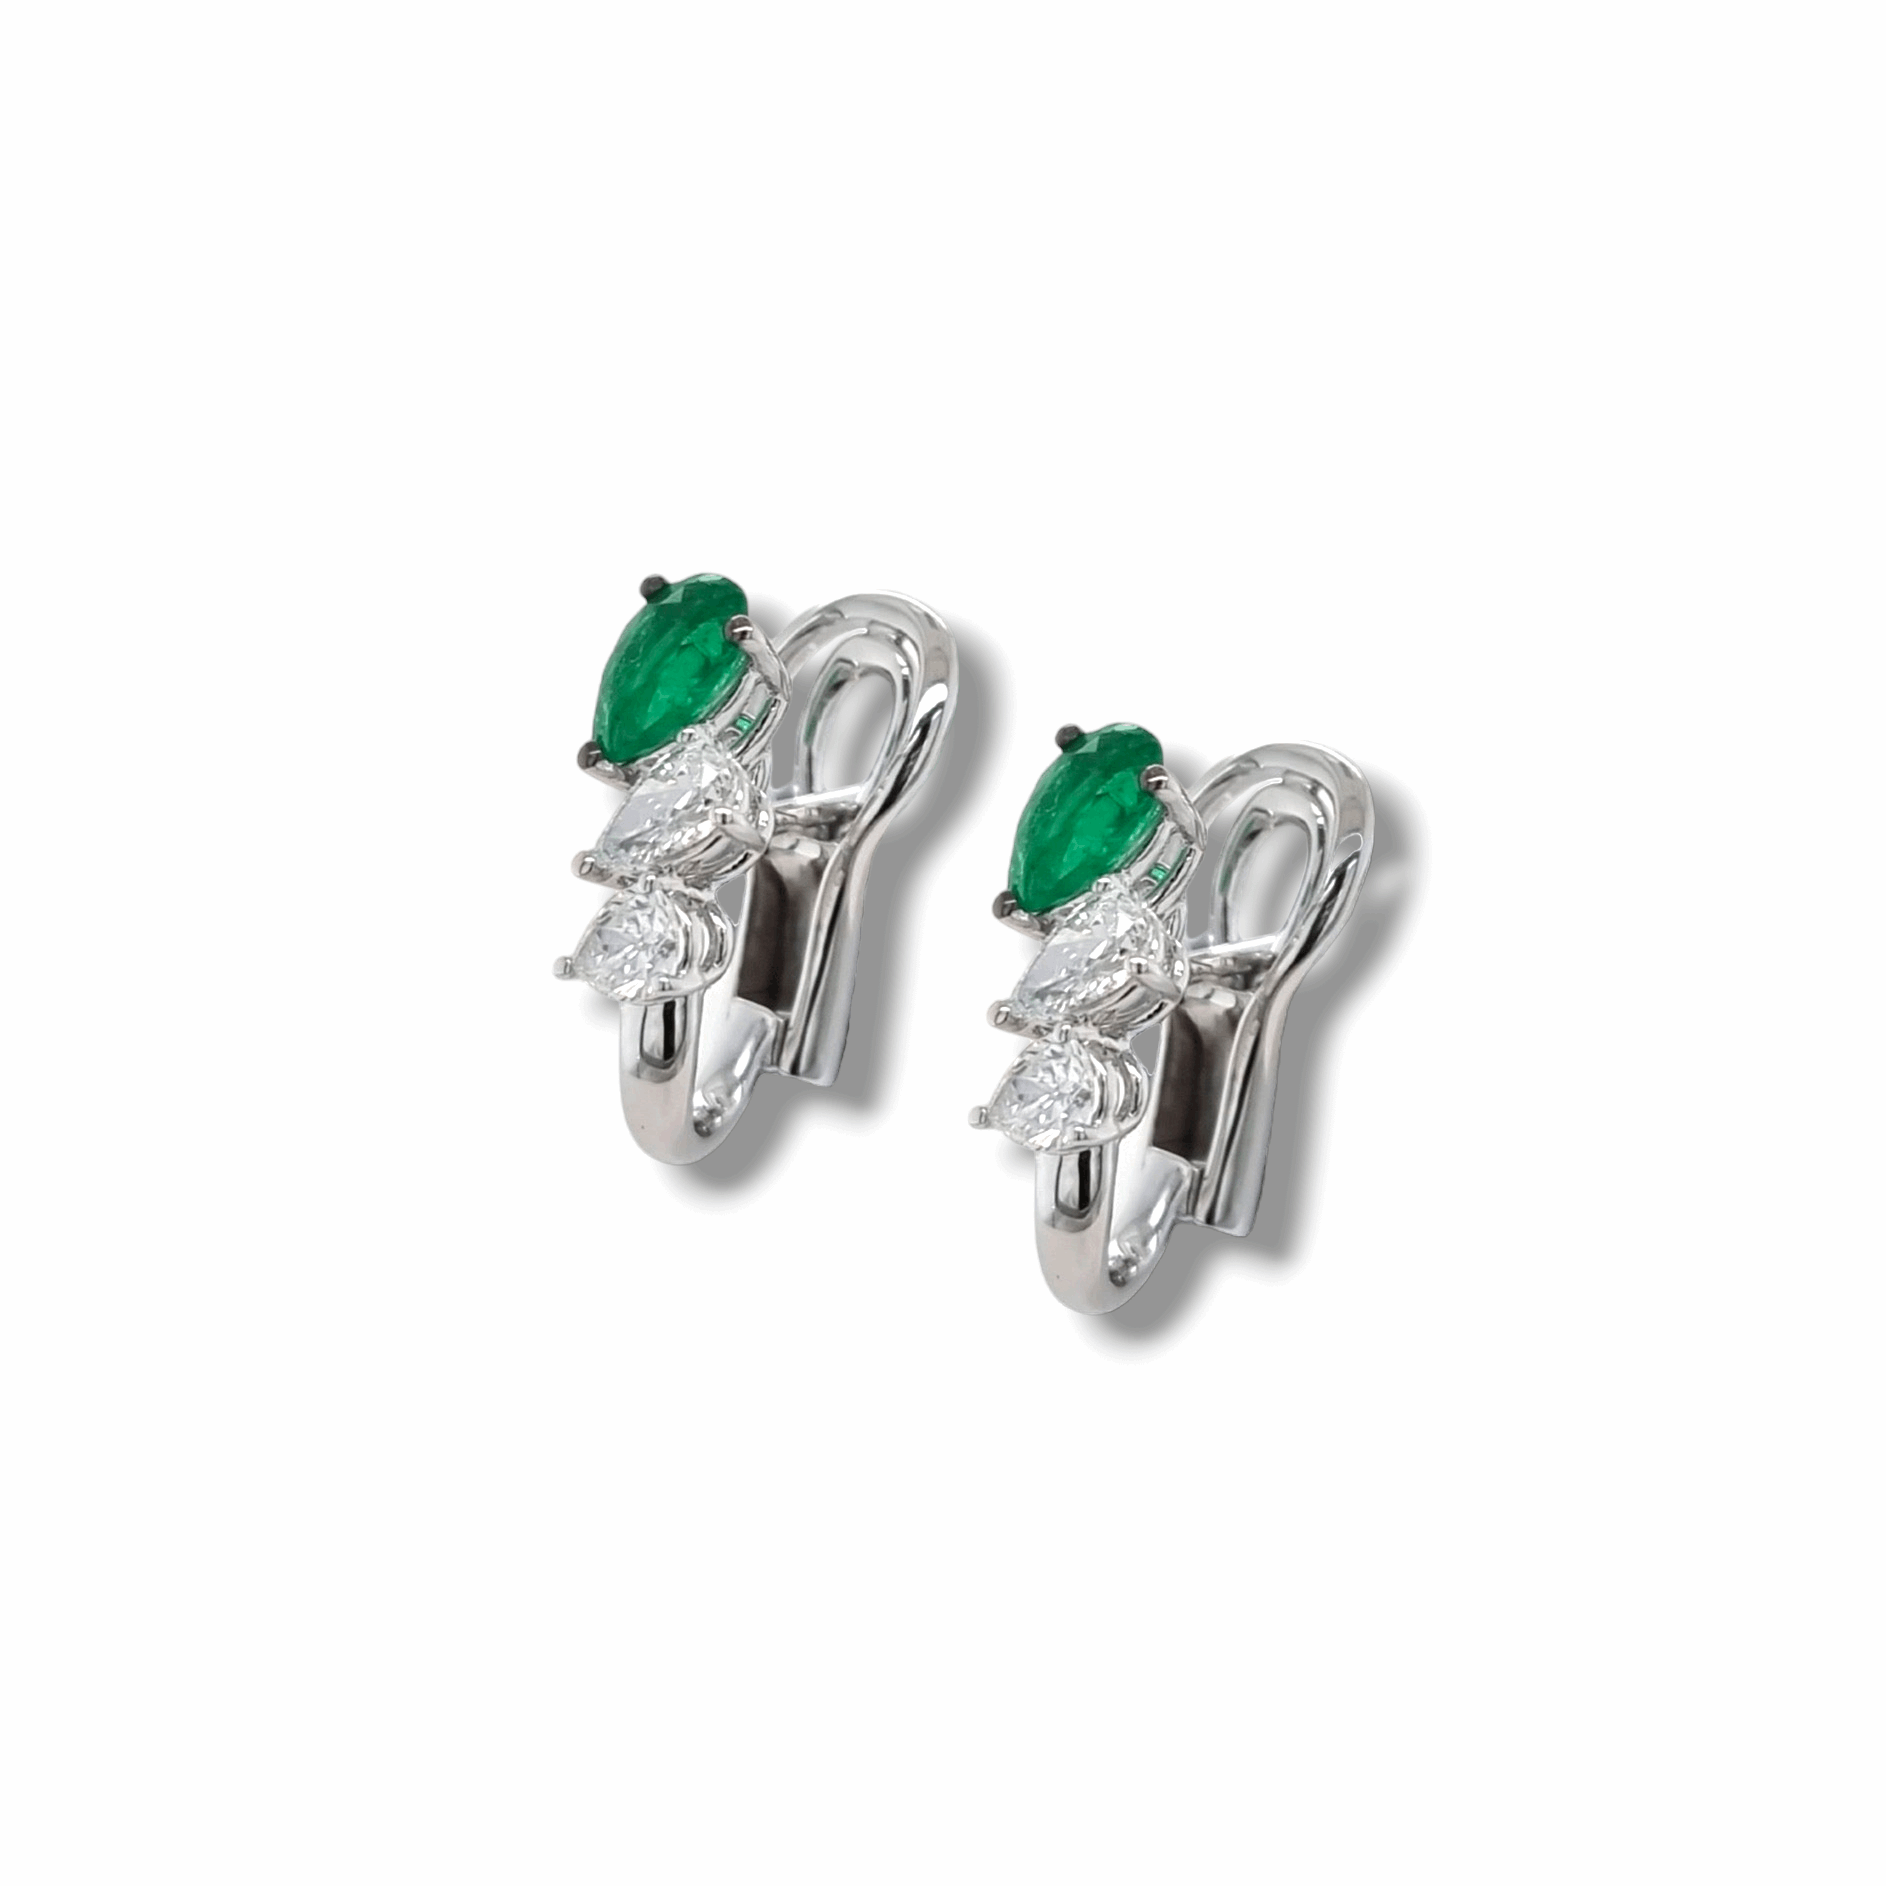 18ct White Gold Diamond & Emerald Earrings